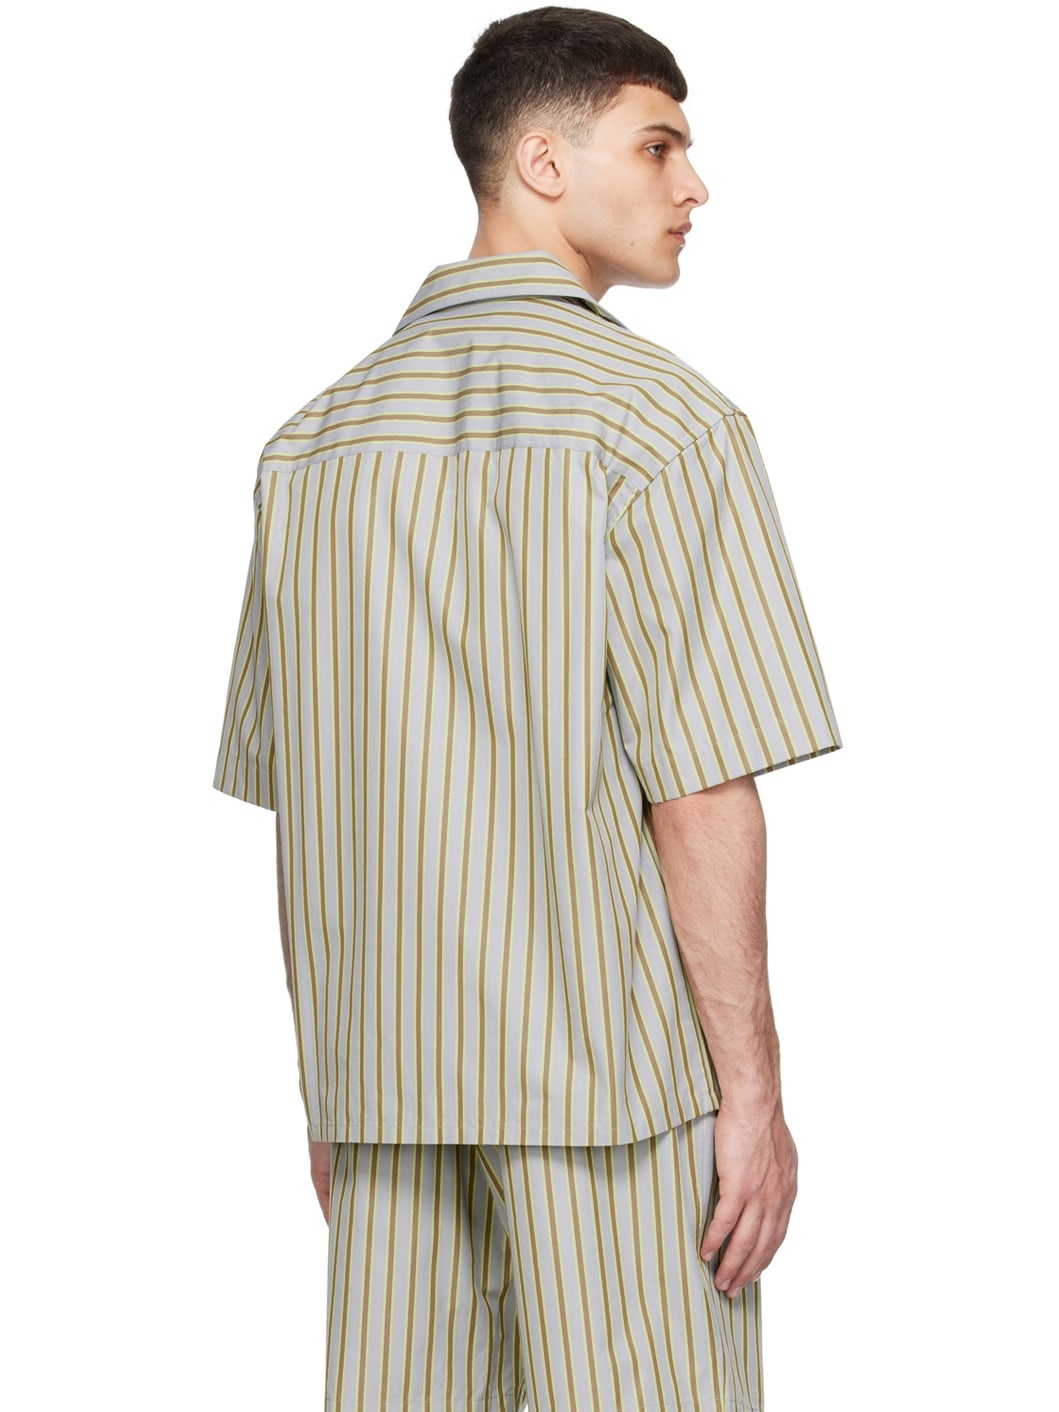 Brown & Gray Striped Shirt - 3